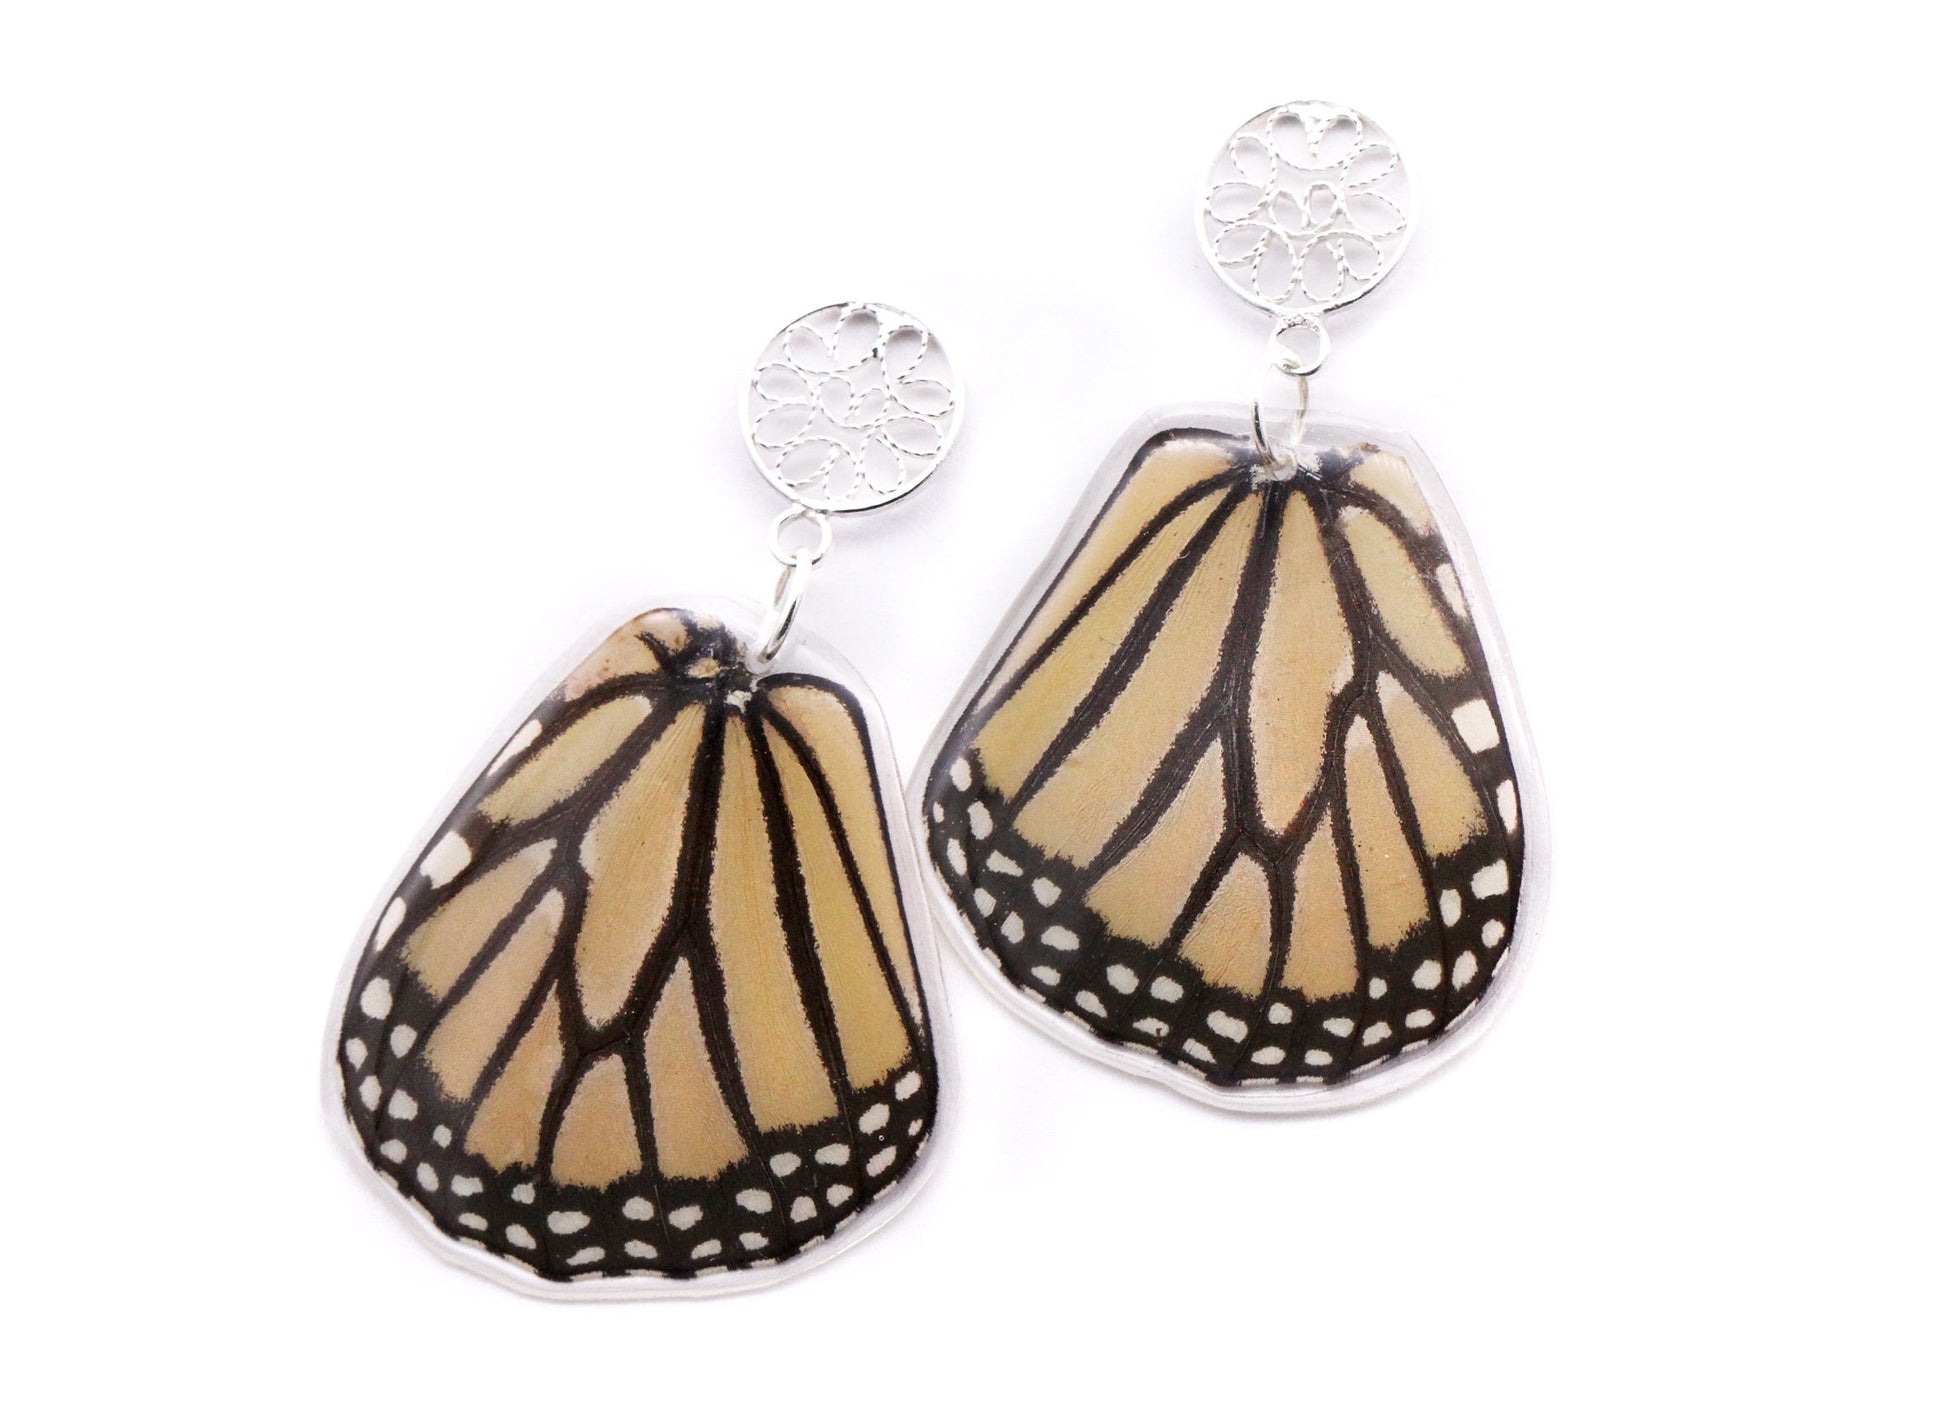 Monarch butterfly wing dangling earrings, sterling silver filigree posts. Orange black and white earrings.